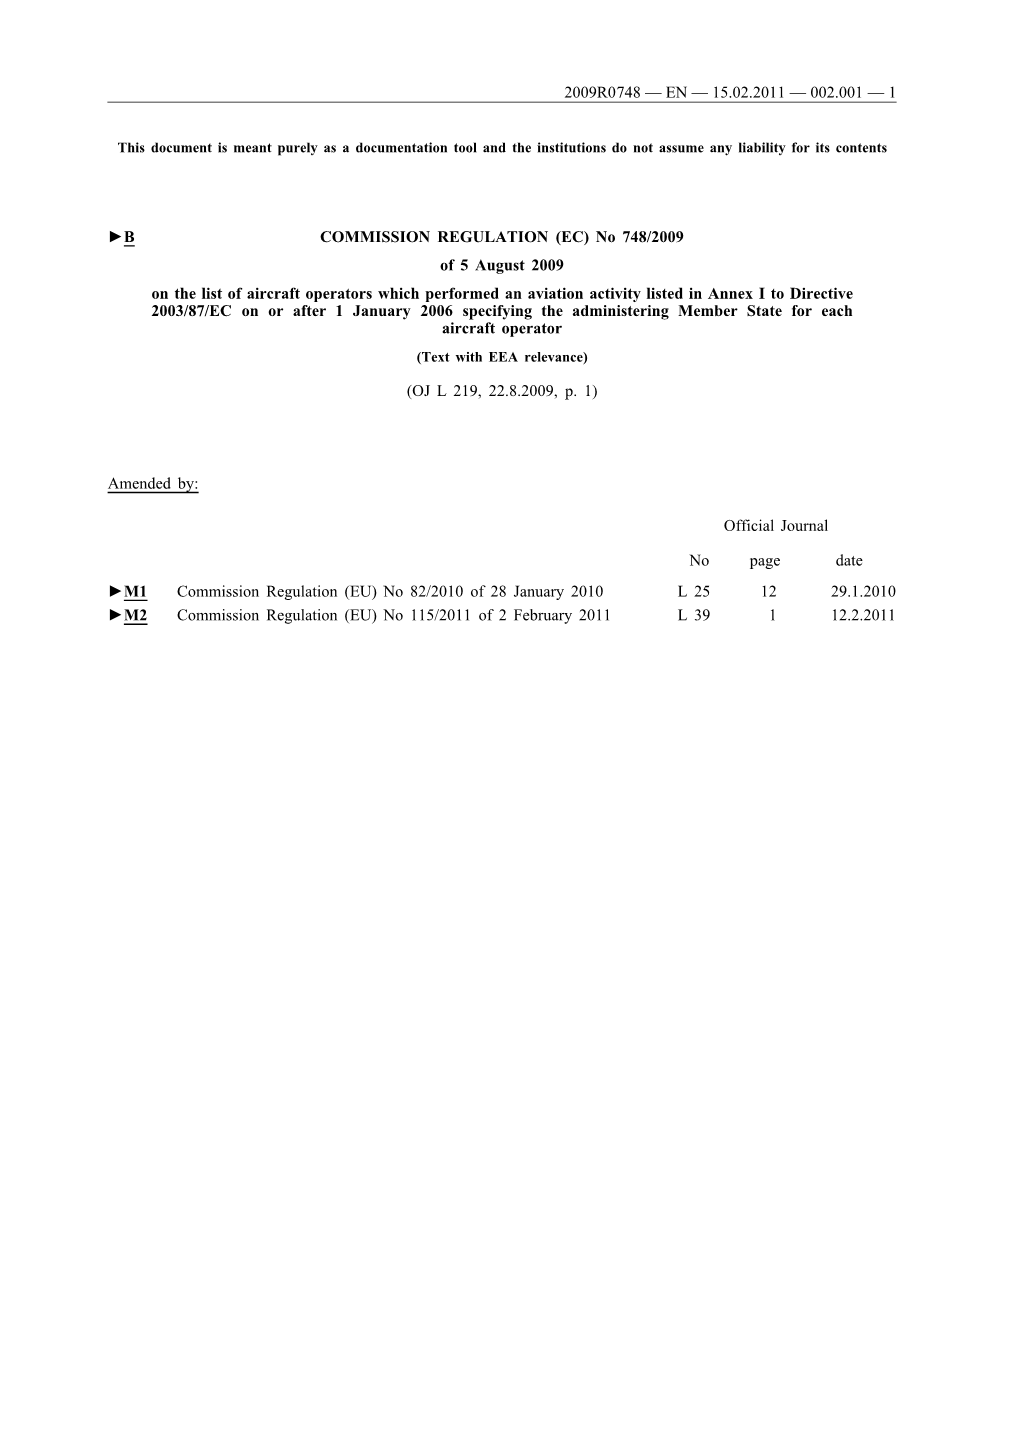 B COMMISSION REGULATION (EC) No 748/2009 Of